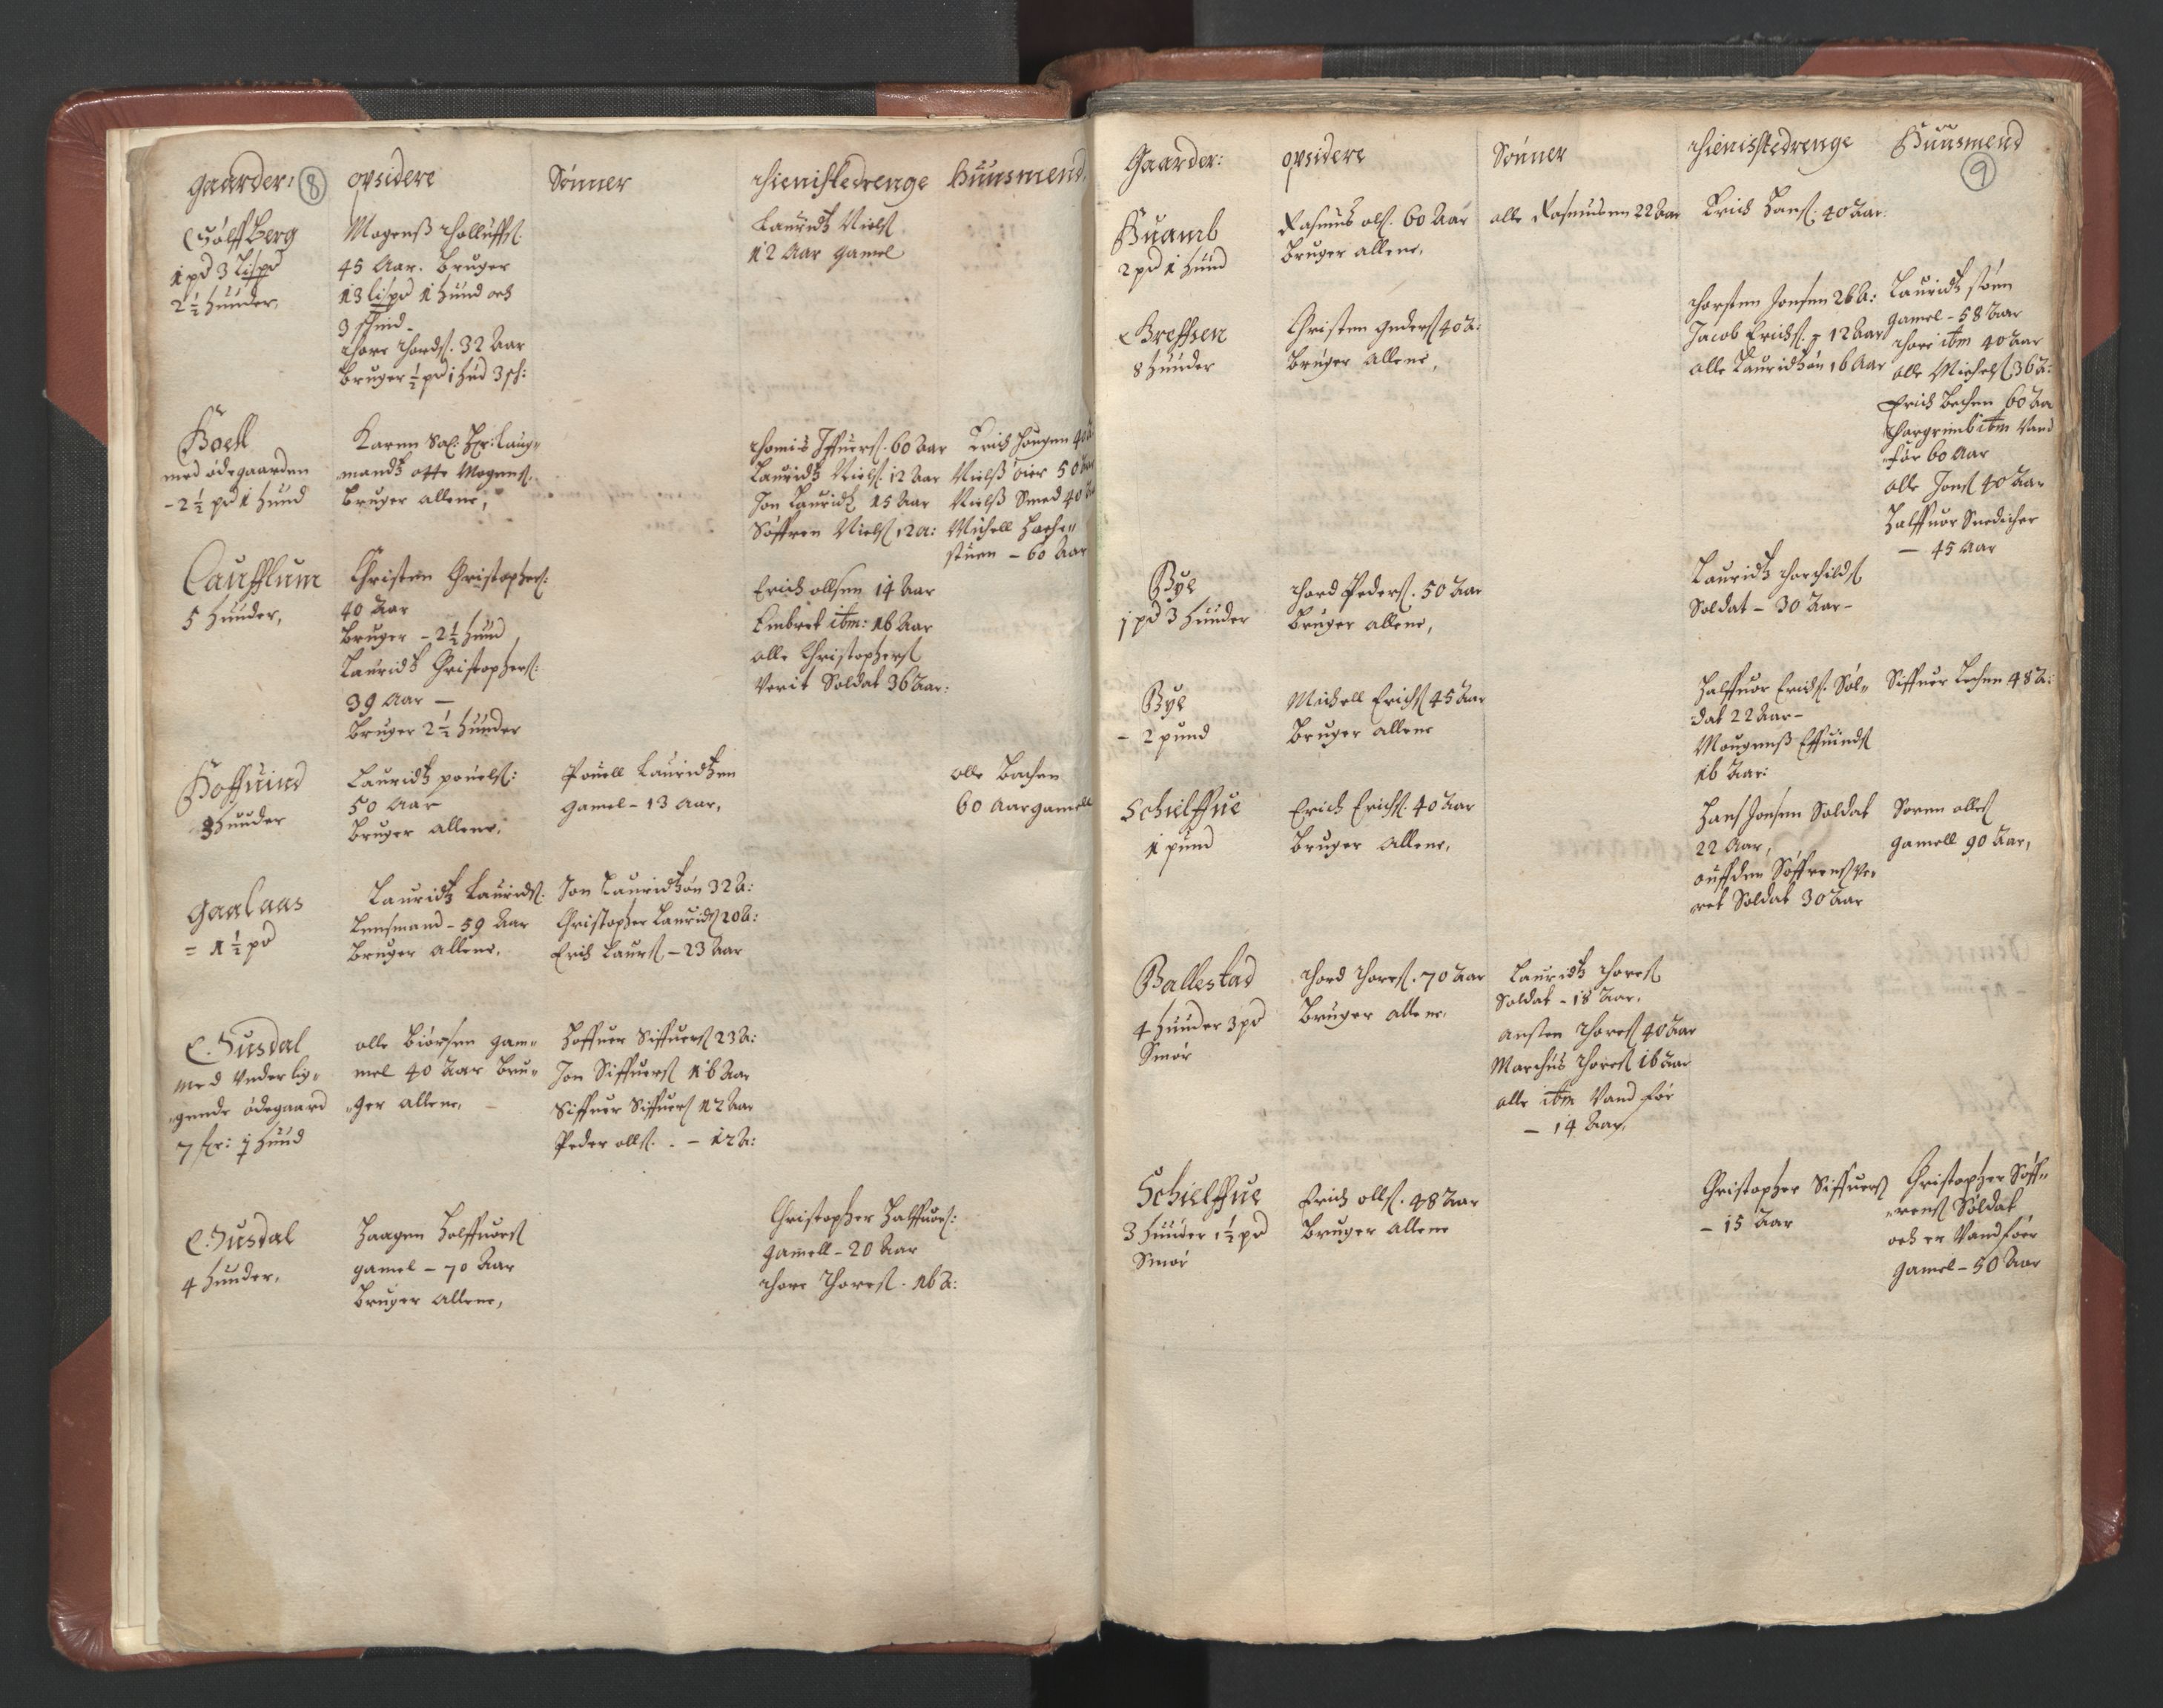 RA, Fogdenes og sorenskrivernes manntall 1664-1666, nr. 3: Hedmark fogderi og Solør, Østerdal og Odal fogderi, 1664, s. 8-9